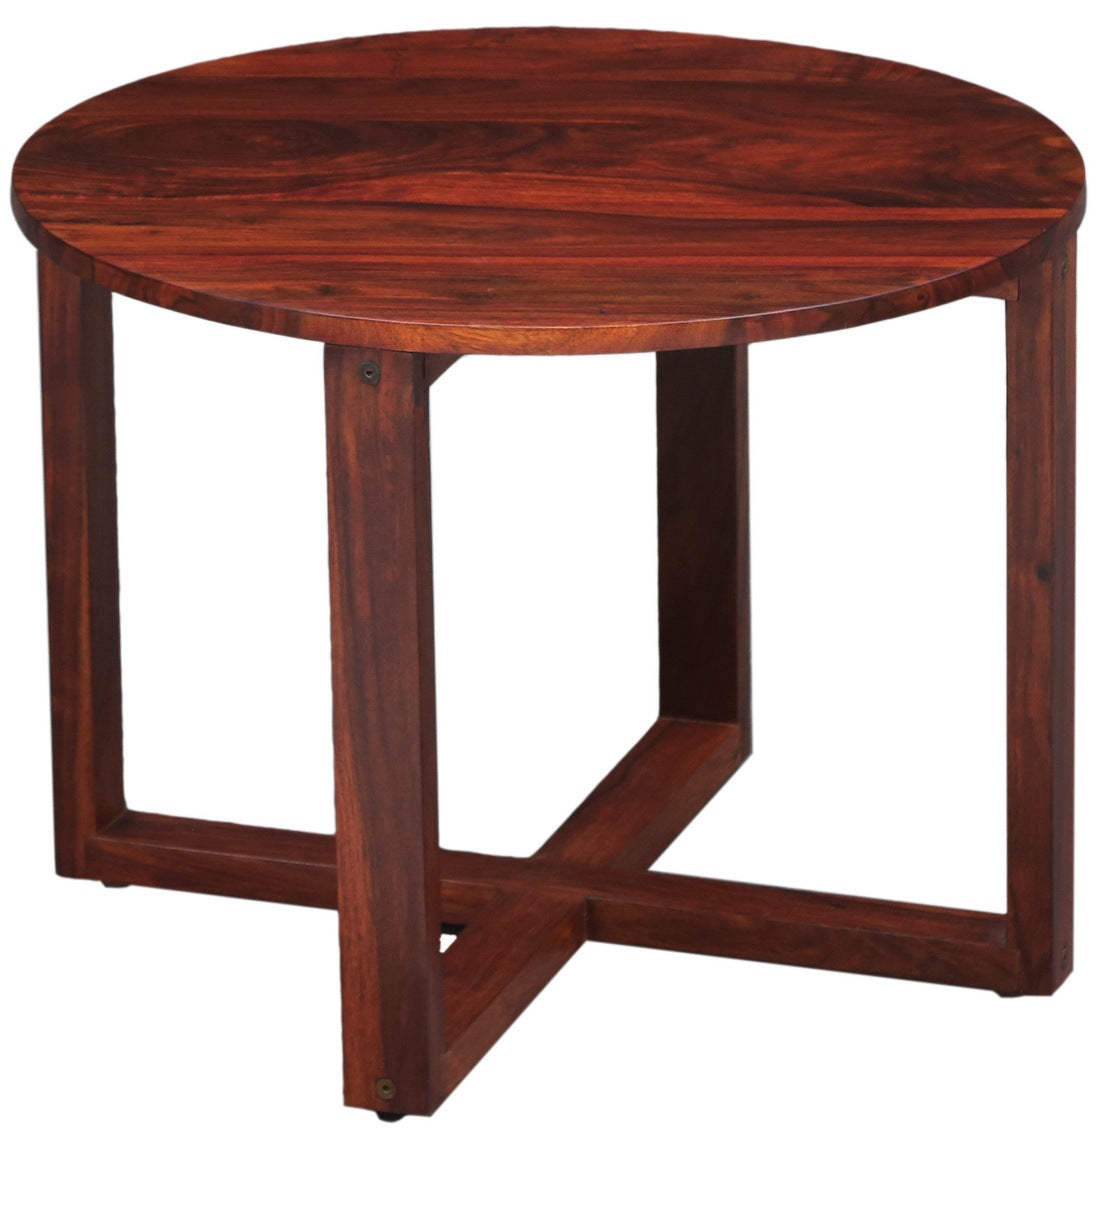 Detro Wooden Center Coffee Table For Living Room in Provincial Teak Finish - Rajwada Furnish